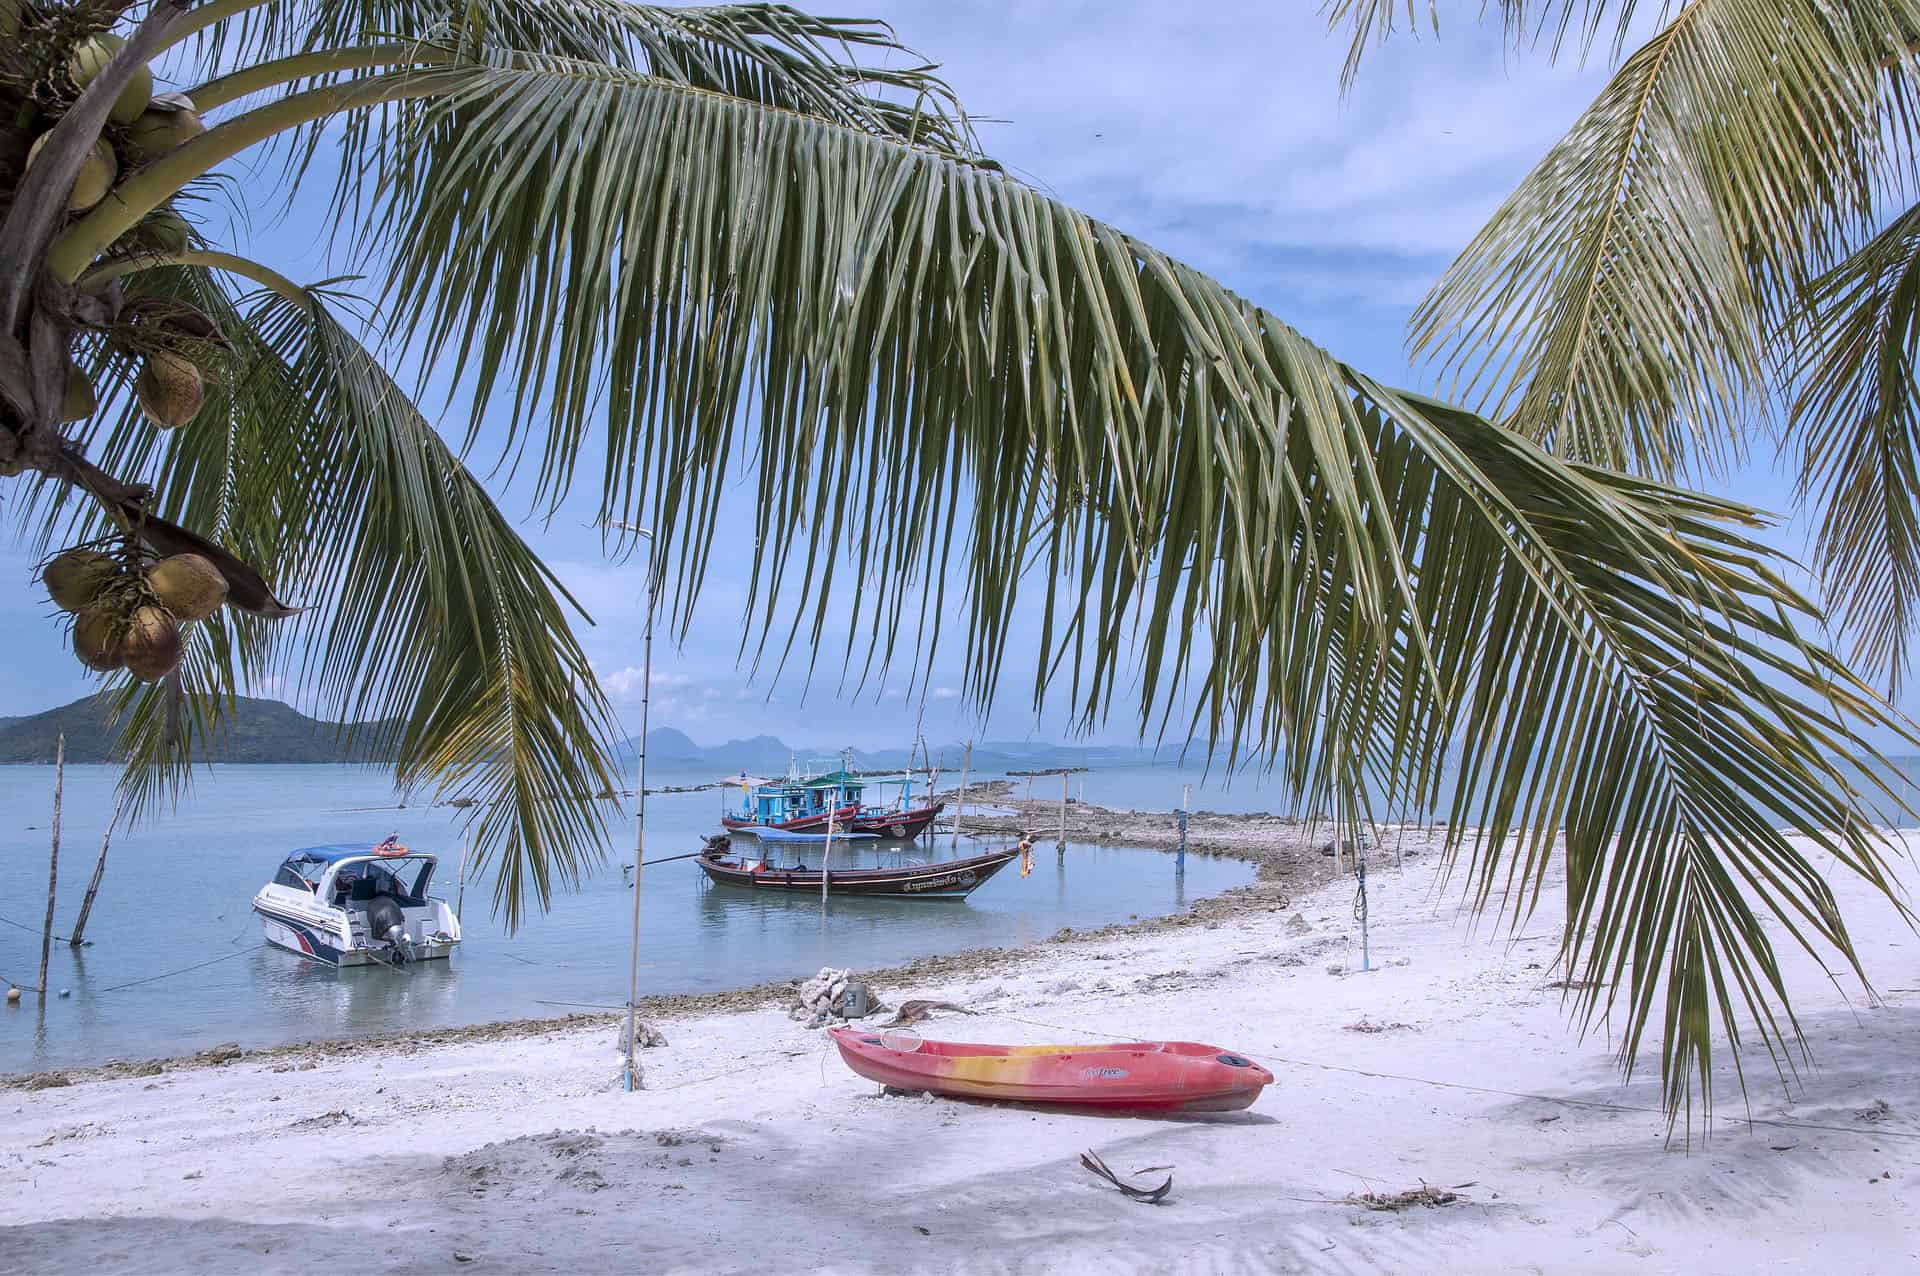 koh samui palm trees and boats on beach